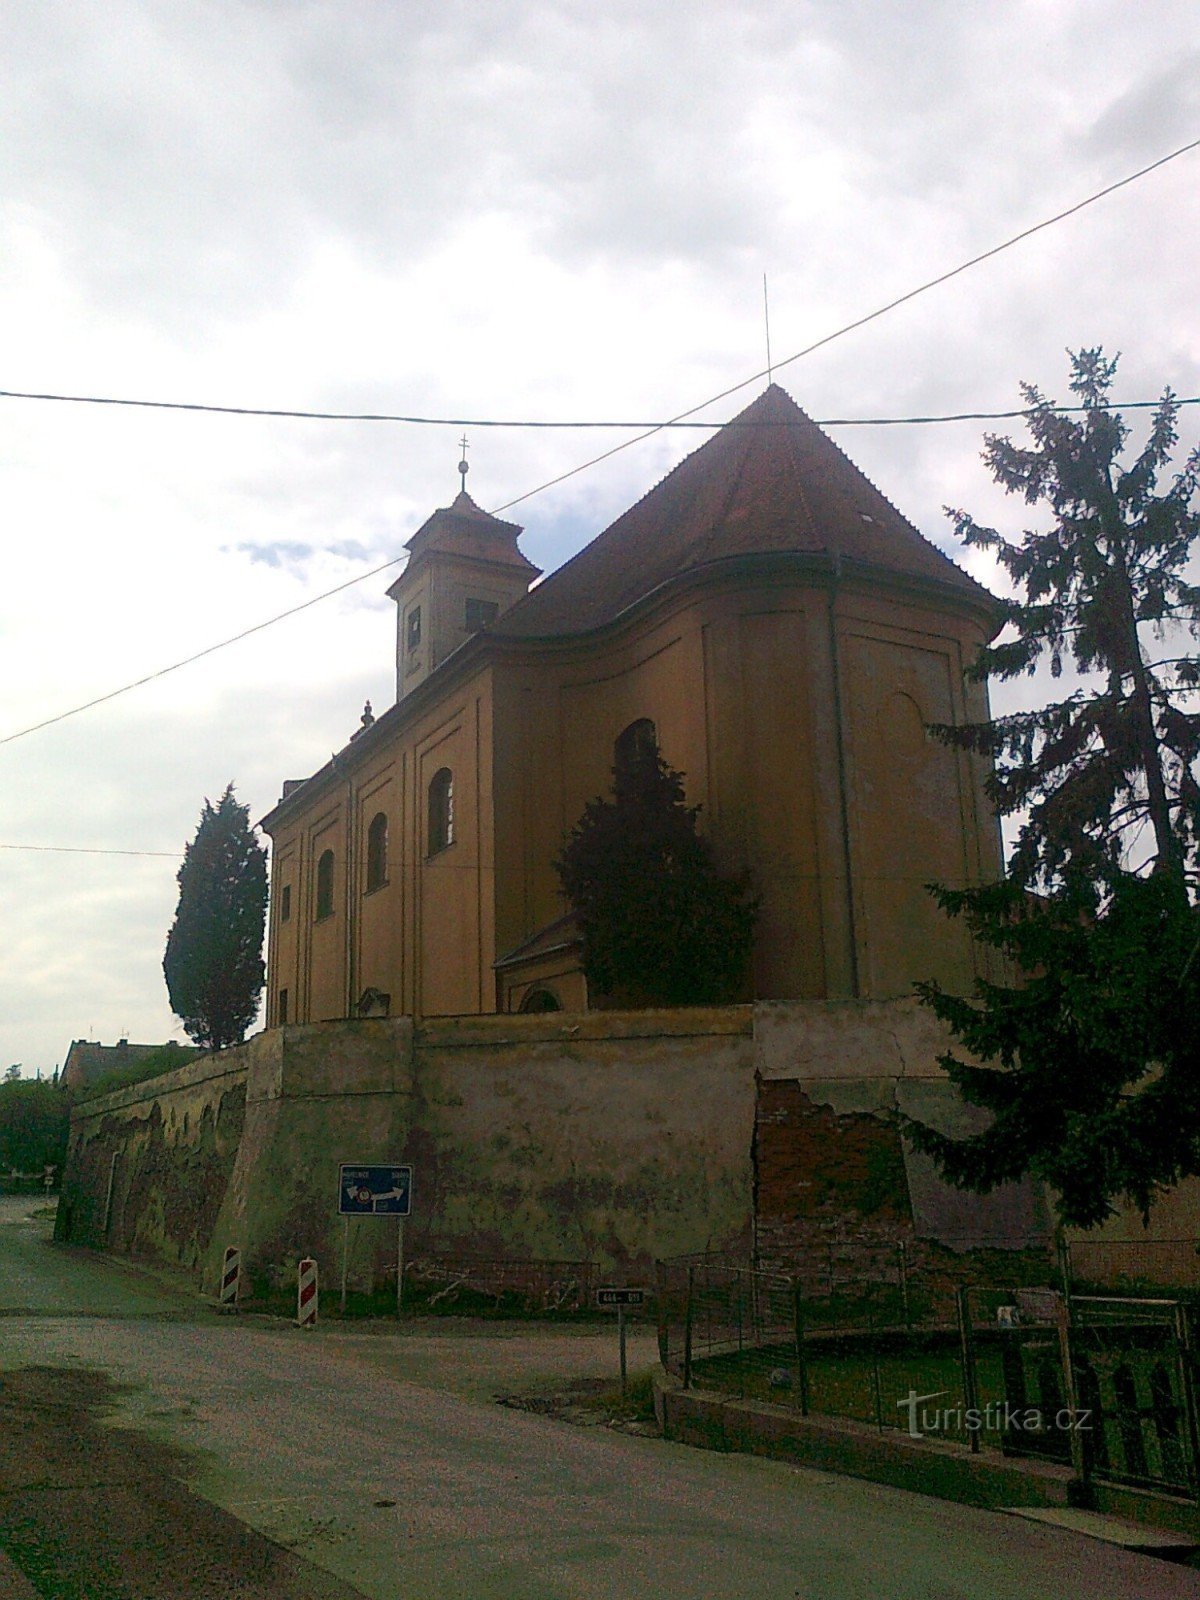 zadnji del cerkve s strani ulice Zámecká